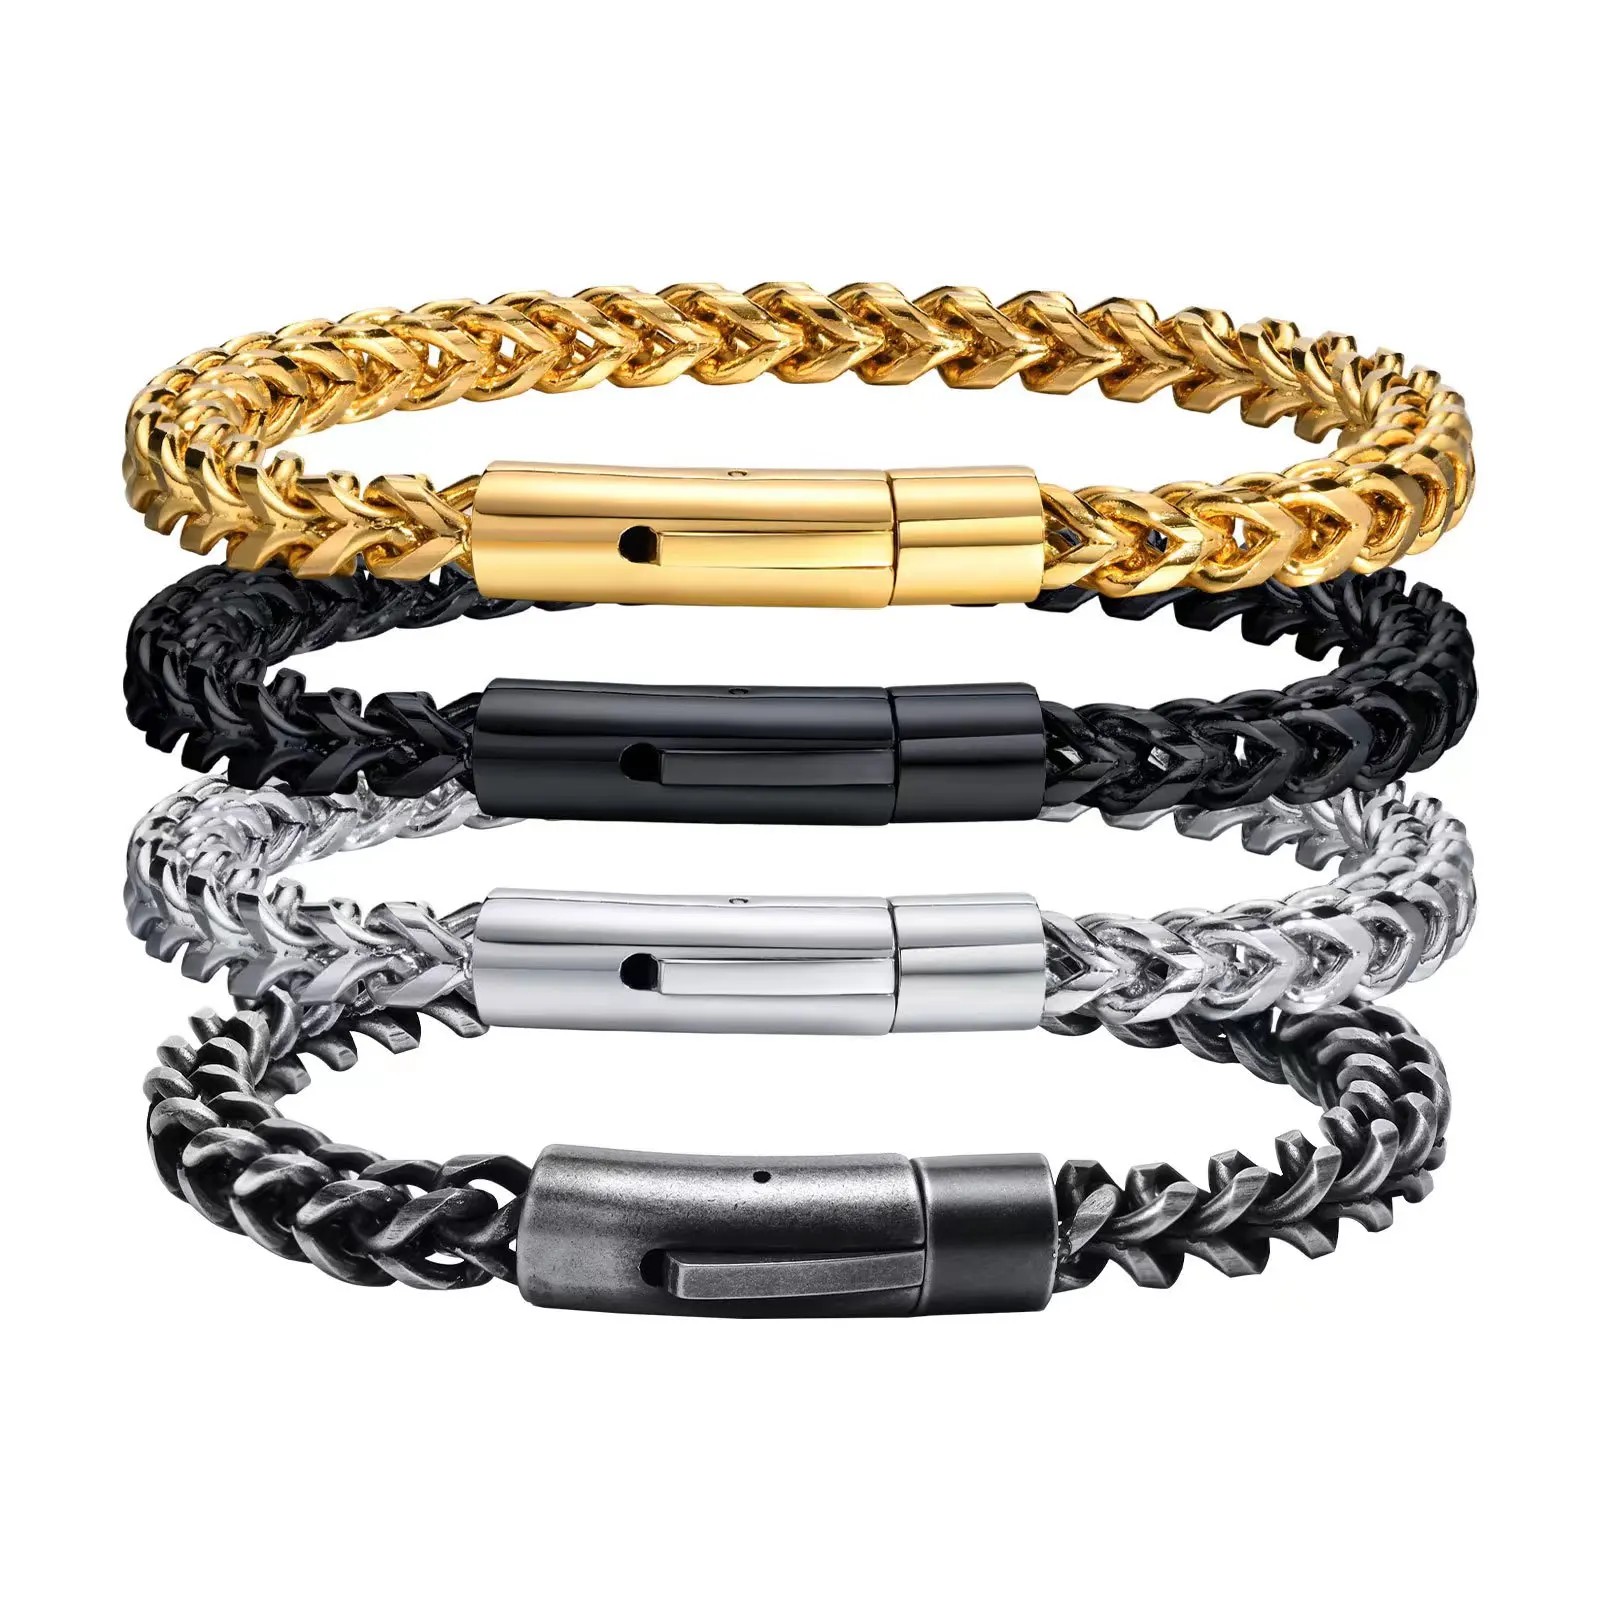 

Stainless Steel Bracelet Retro grey keel chain men's thick bracelet Fashion accessories titanium steel jewelry